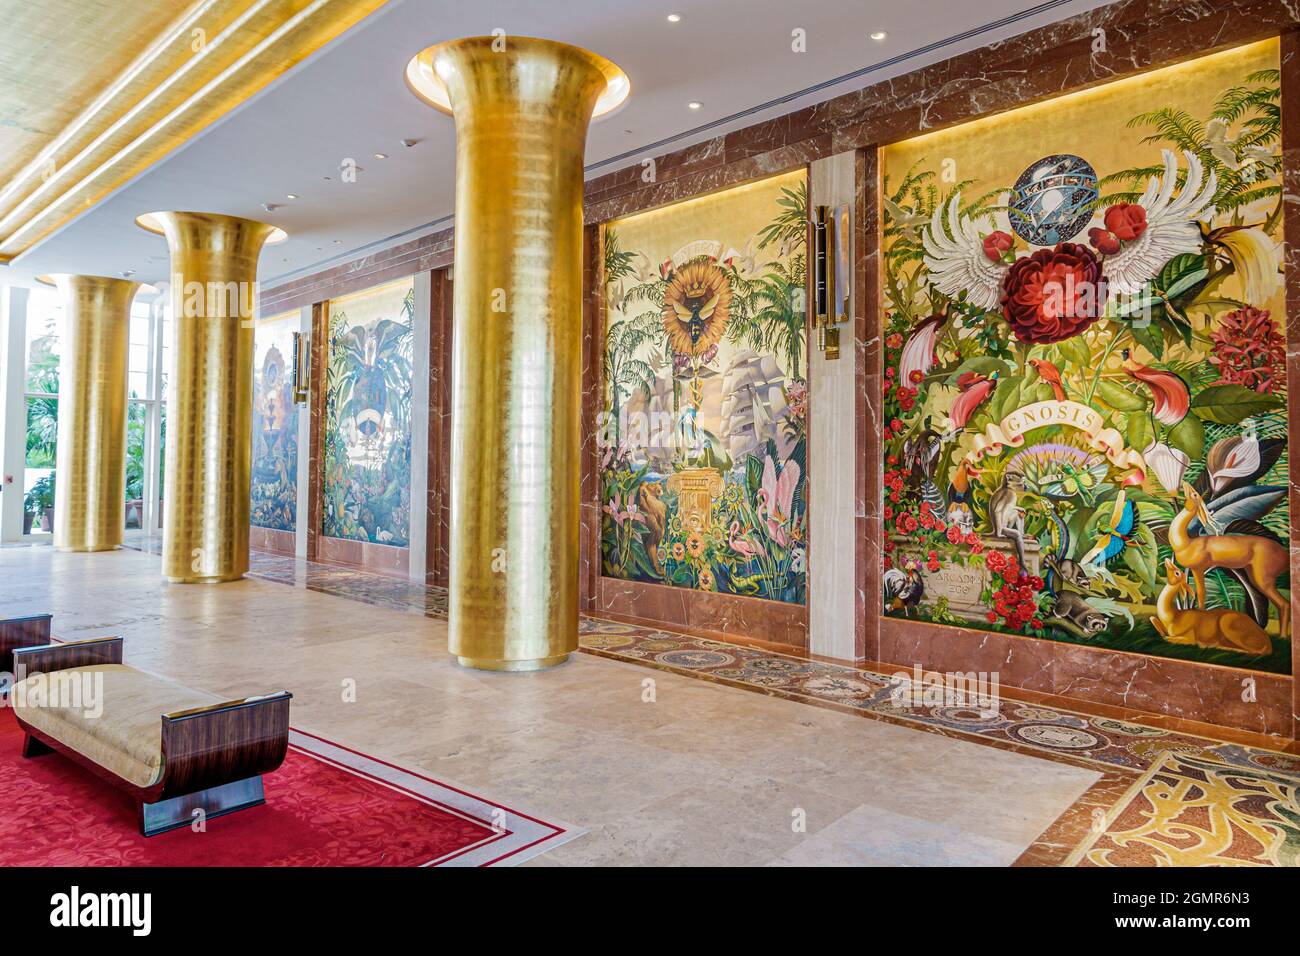 Miami Beach Florida,Faena District,Collins Avenue,Faena Hotel,5-star lobby,wall mural Juan Gatti gold leaf columns décor inside interior Stock Photo